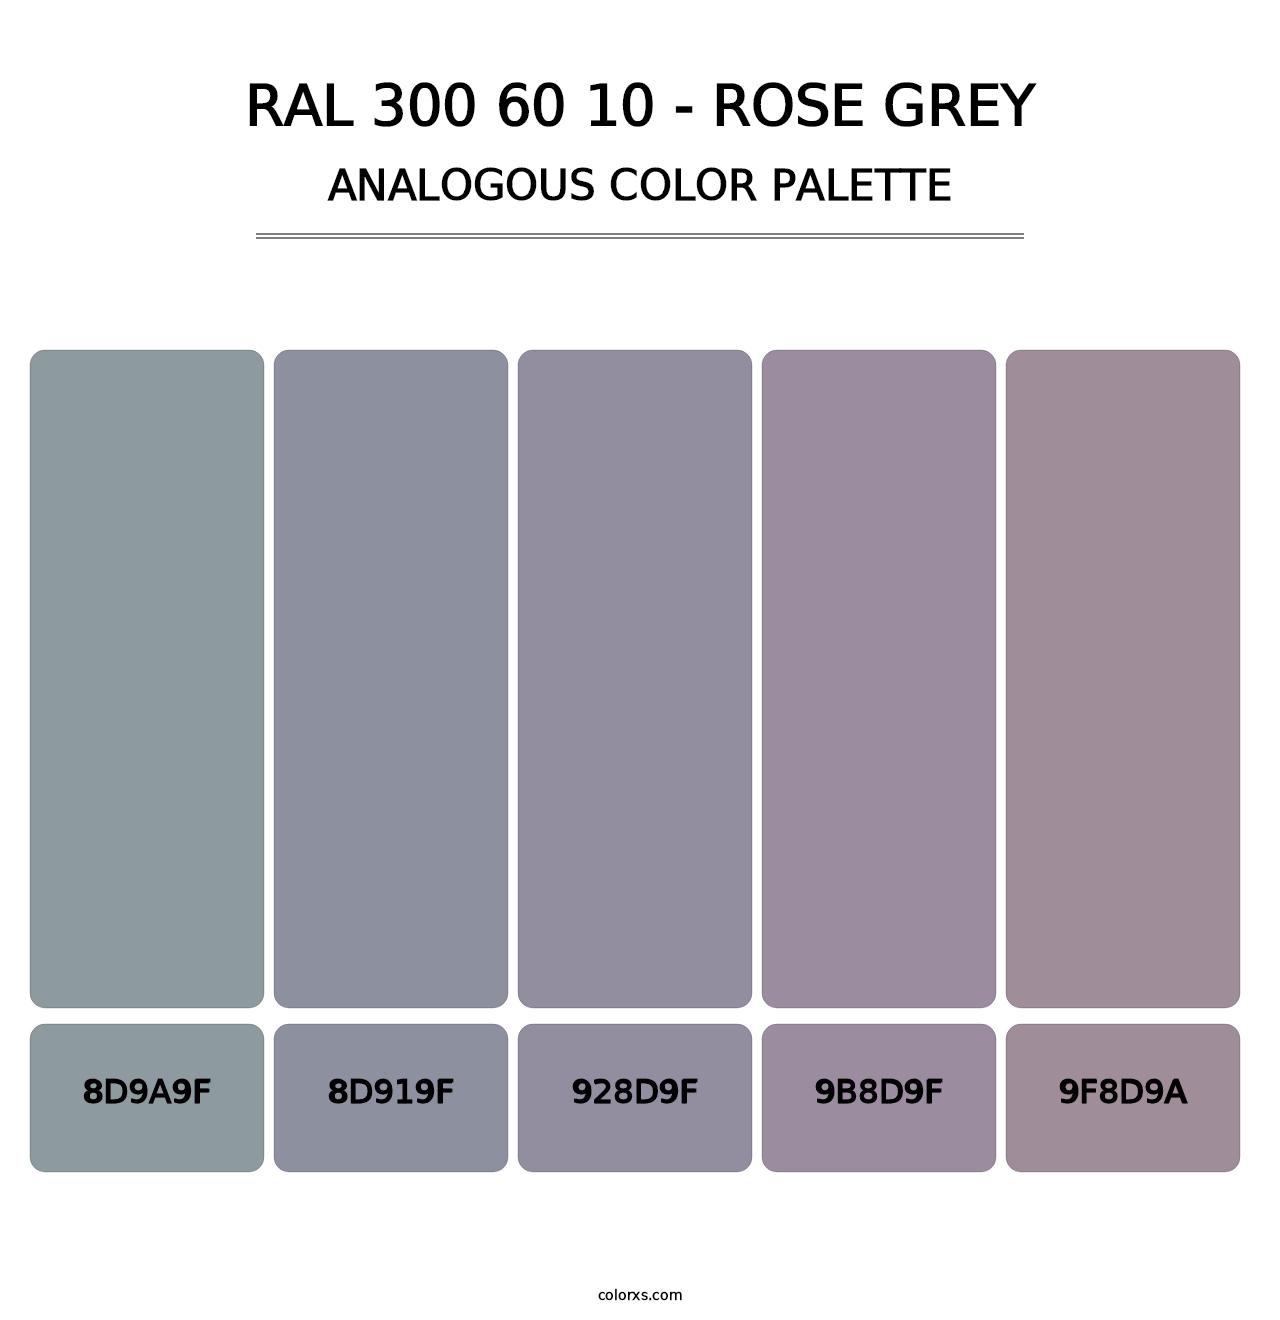 RAL 300 60 10 - Rose Grey - Analogous Color Palette